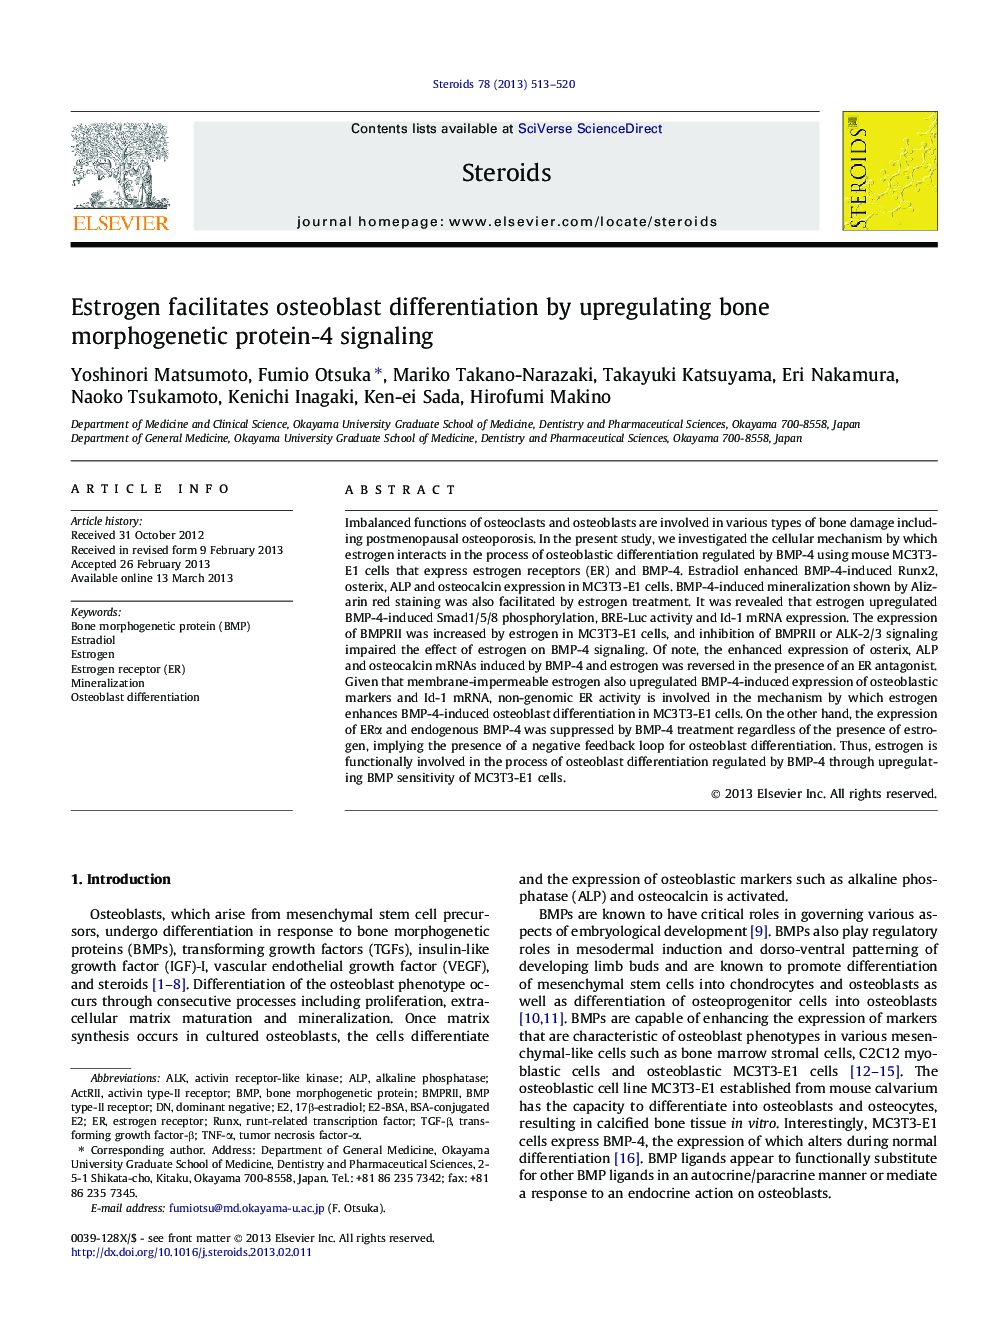 Estrogen facilitates osteoblast differentiation by upregulating bone morphogenetic protein-4 signaling